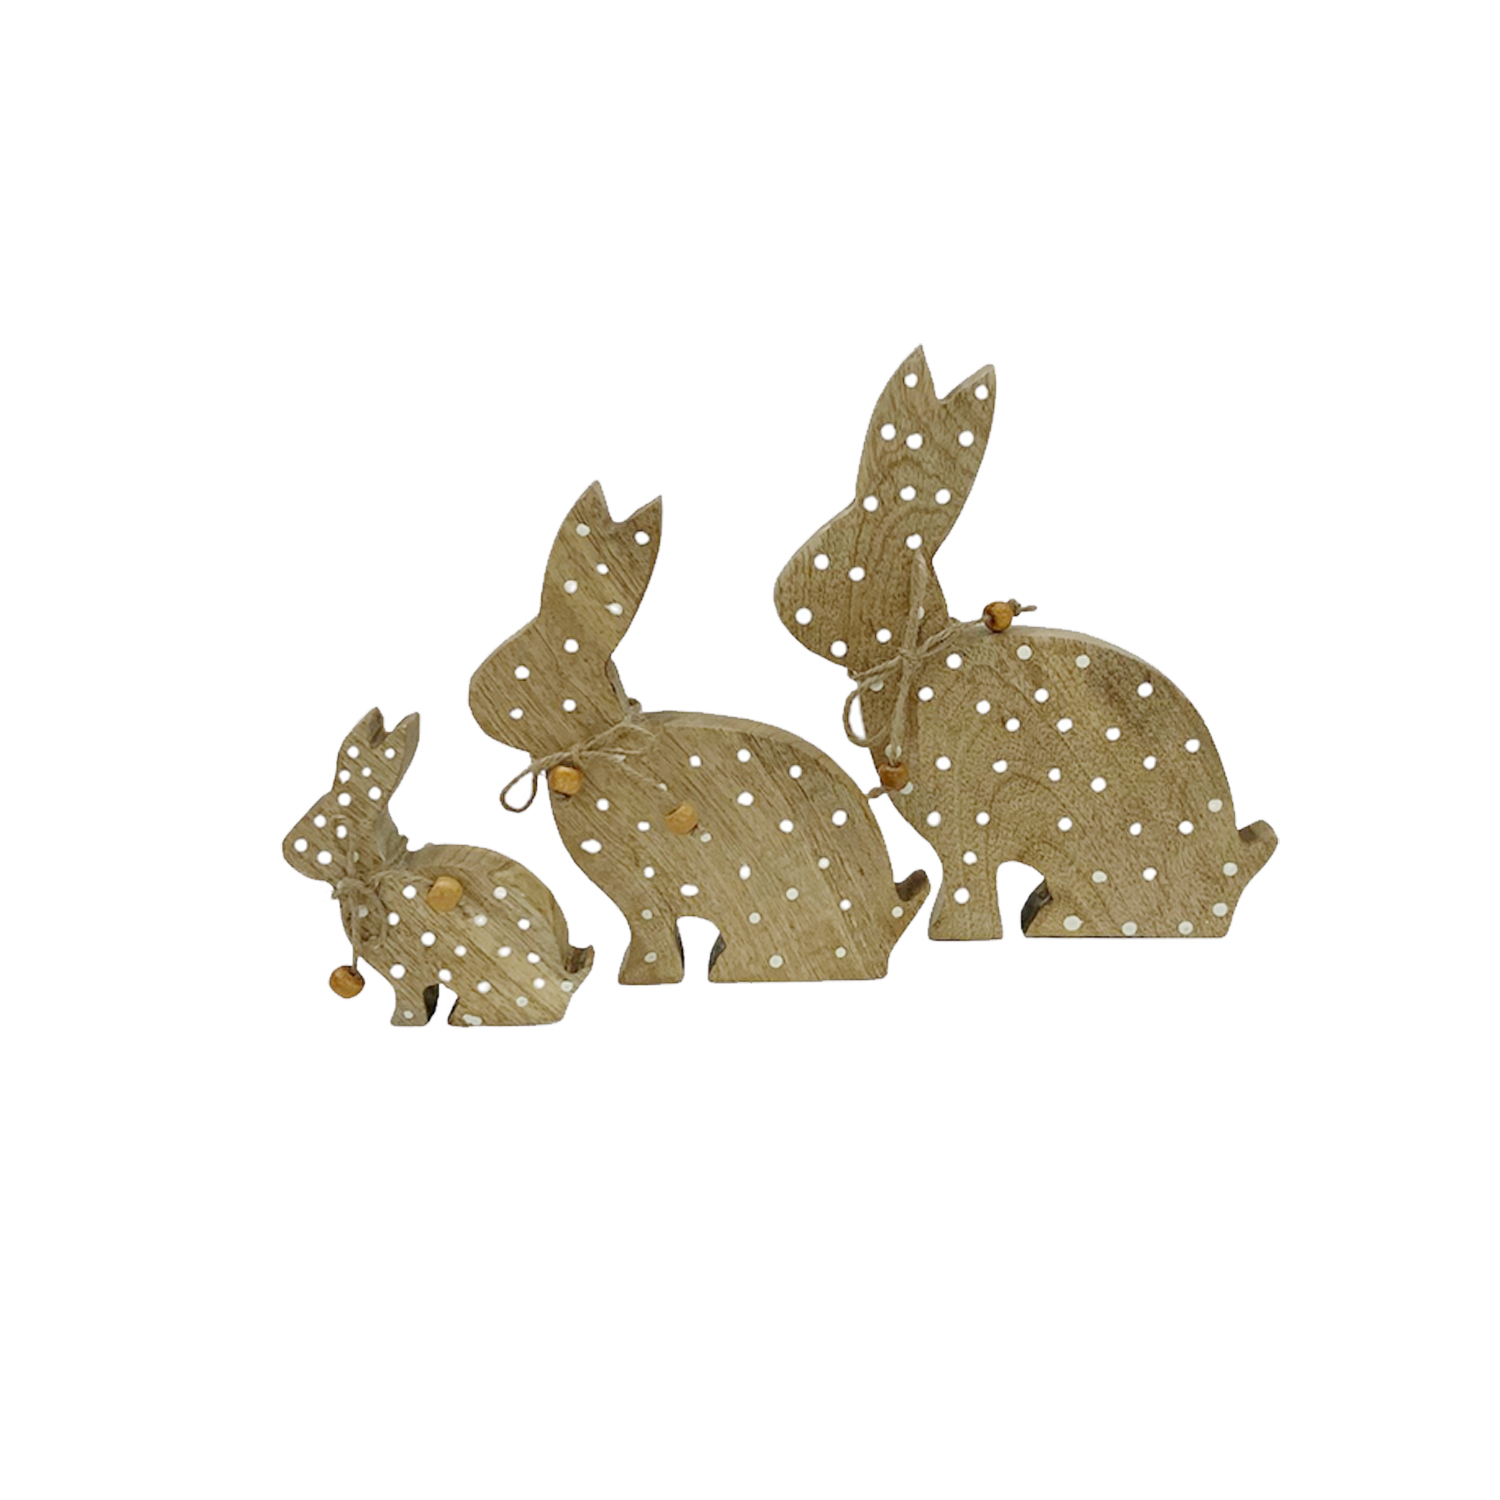 Decorative Polka Dot Rabbits Set Of 3 9-15-19cm Gift